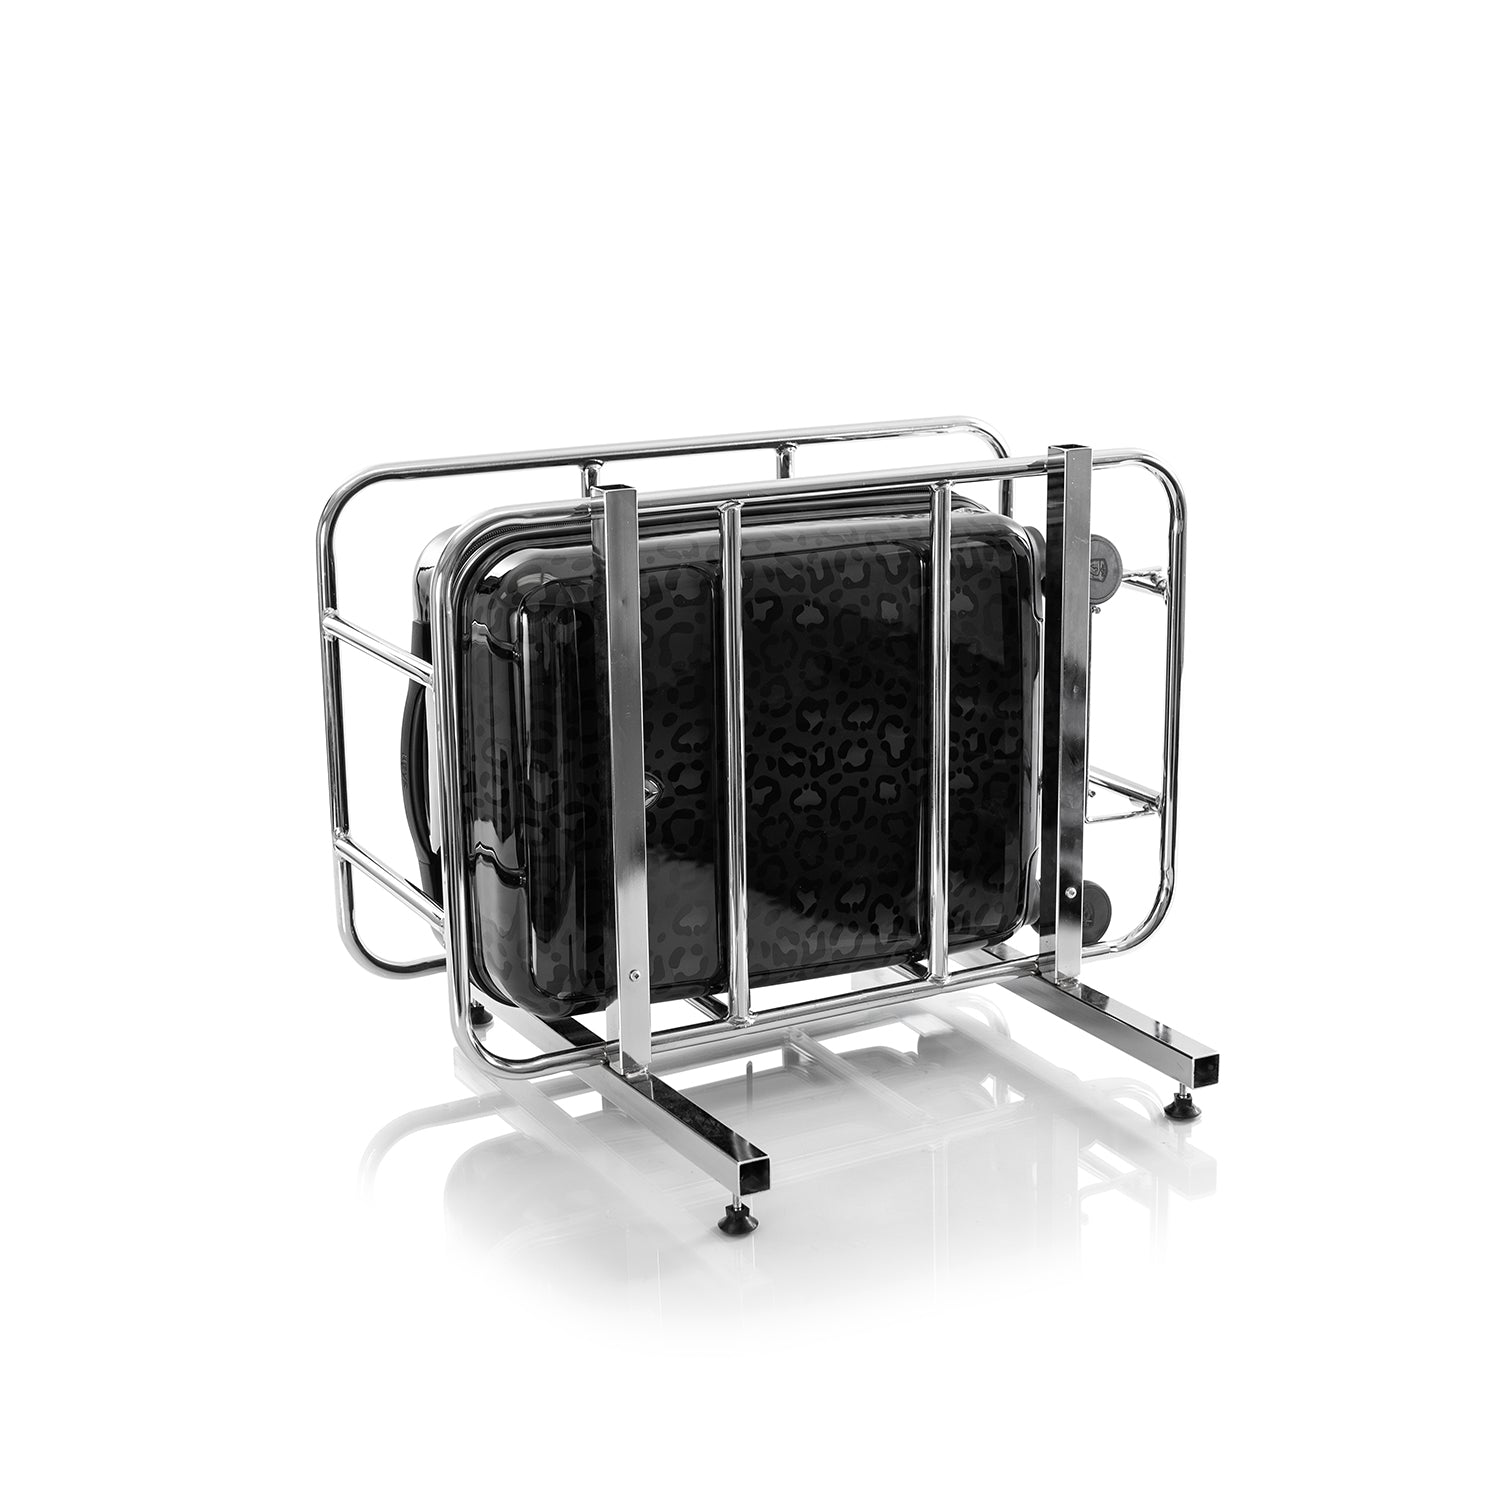 Black Leopard Fashion Spinner® 3 Piece Luggage Set